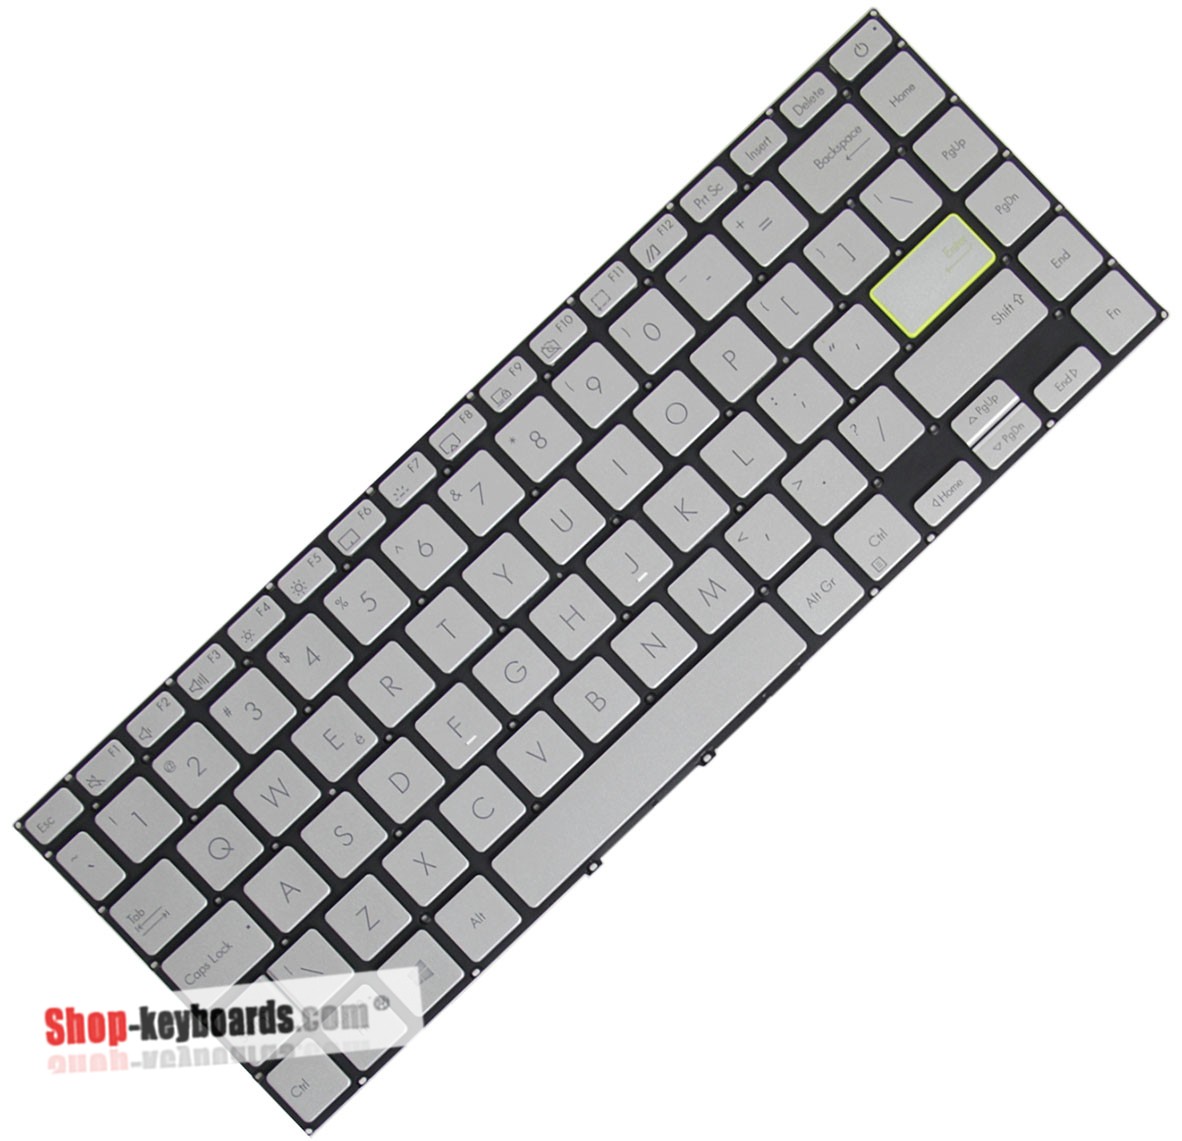 Asus AEXKSQ00130  Keyboard replacement